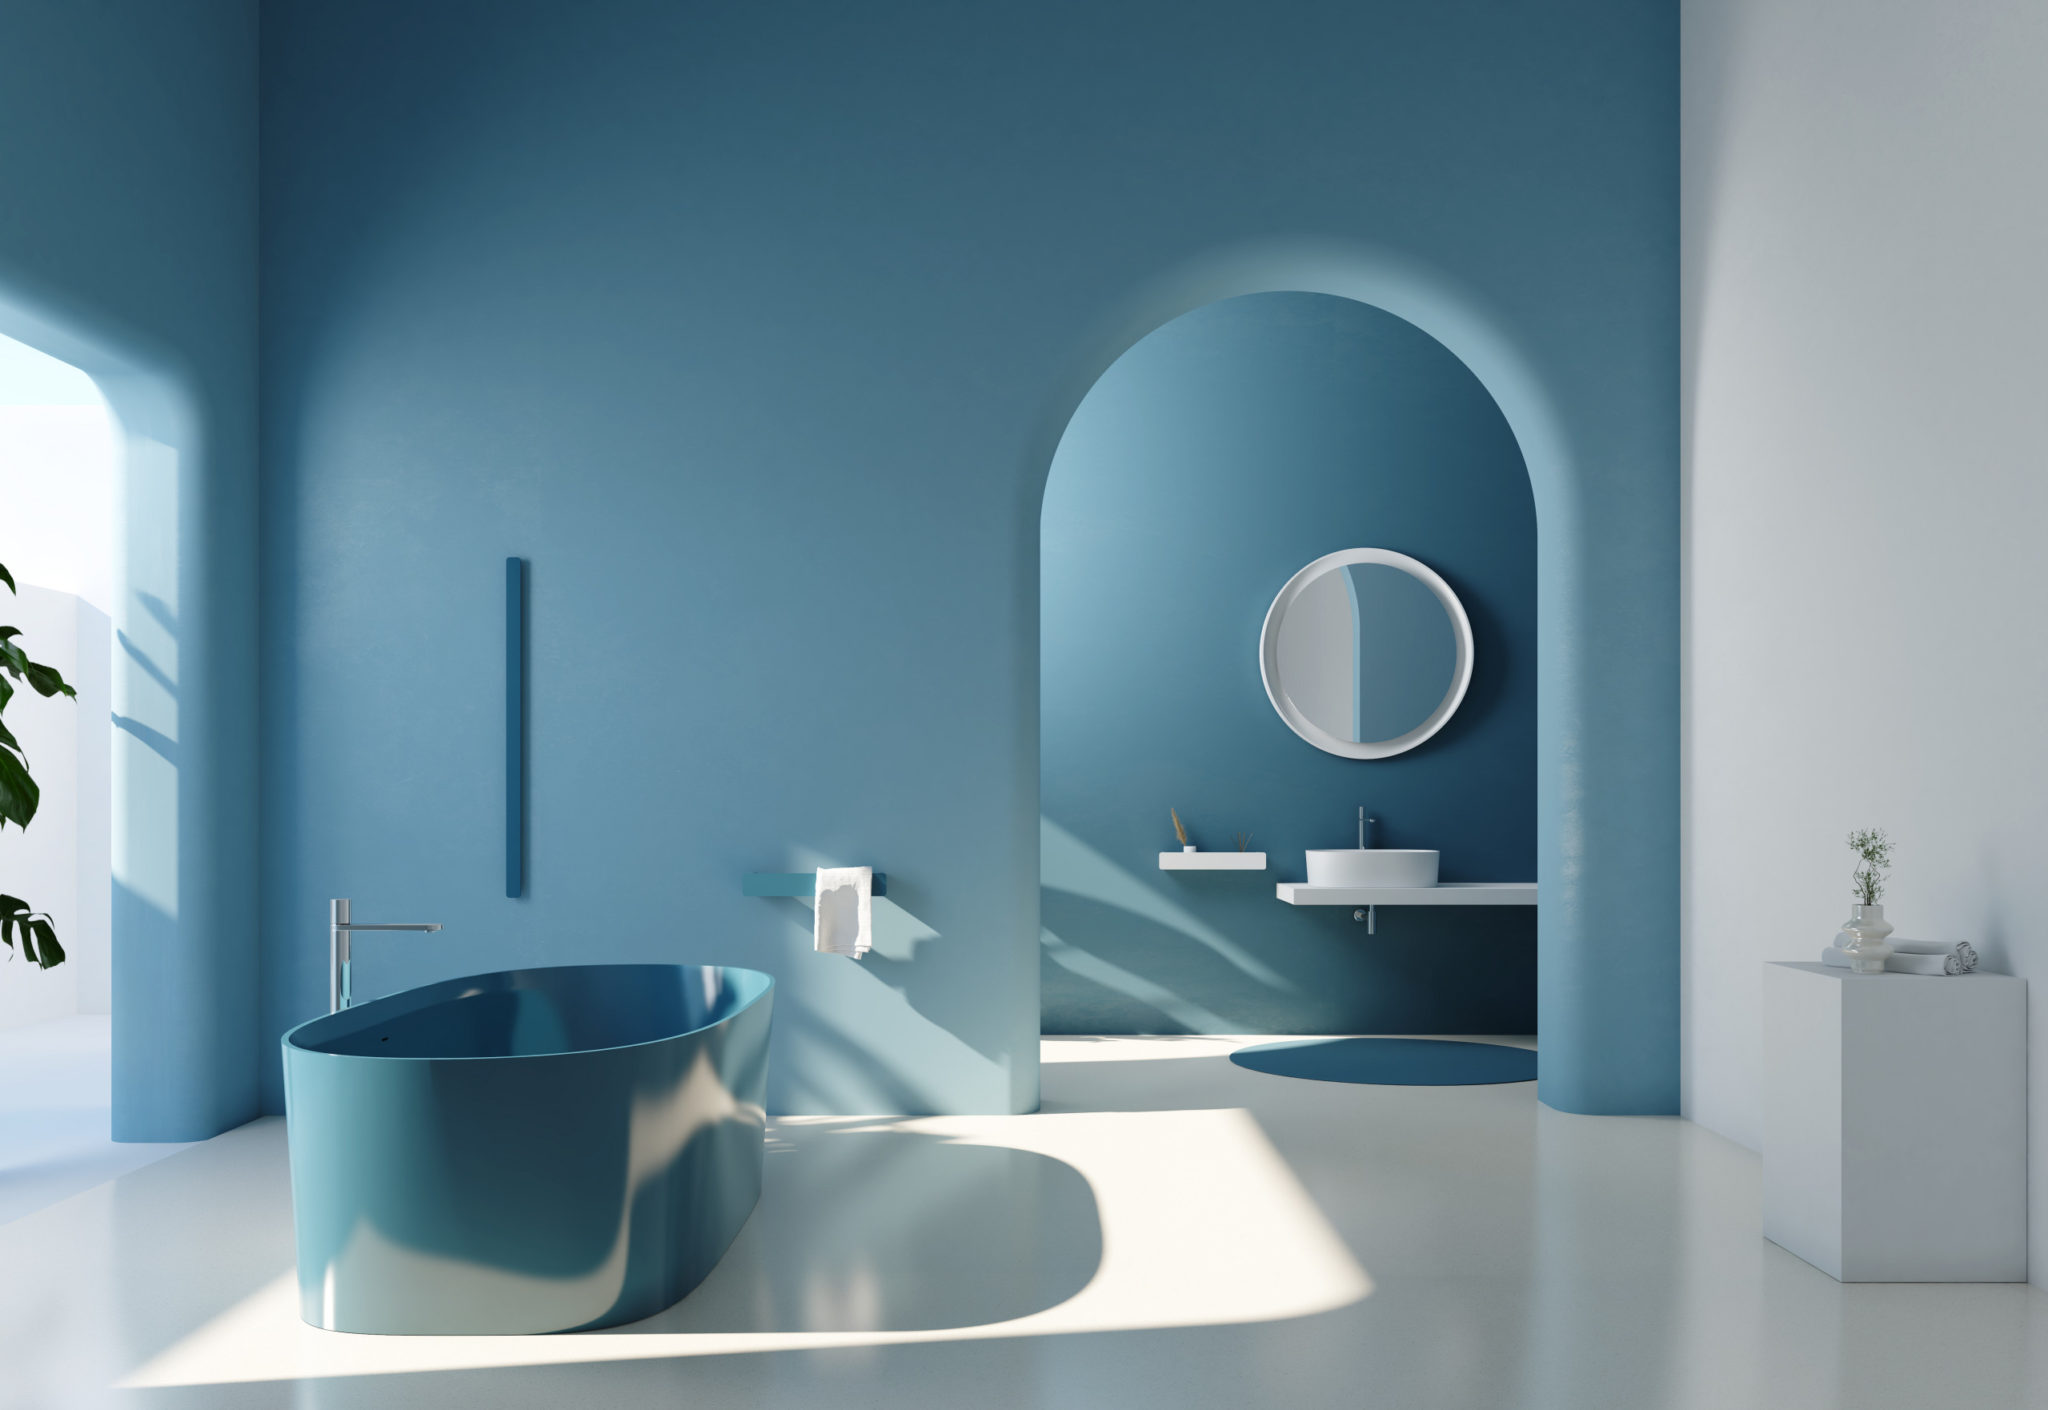 Bathroom Trends 2023: A Splash of Colors and Minimalist Tile Designs